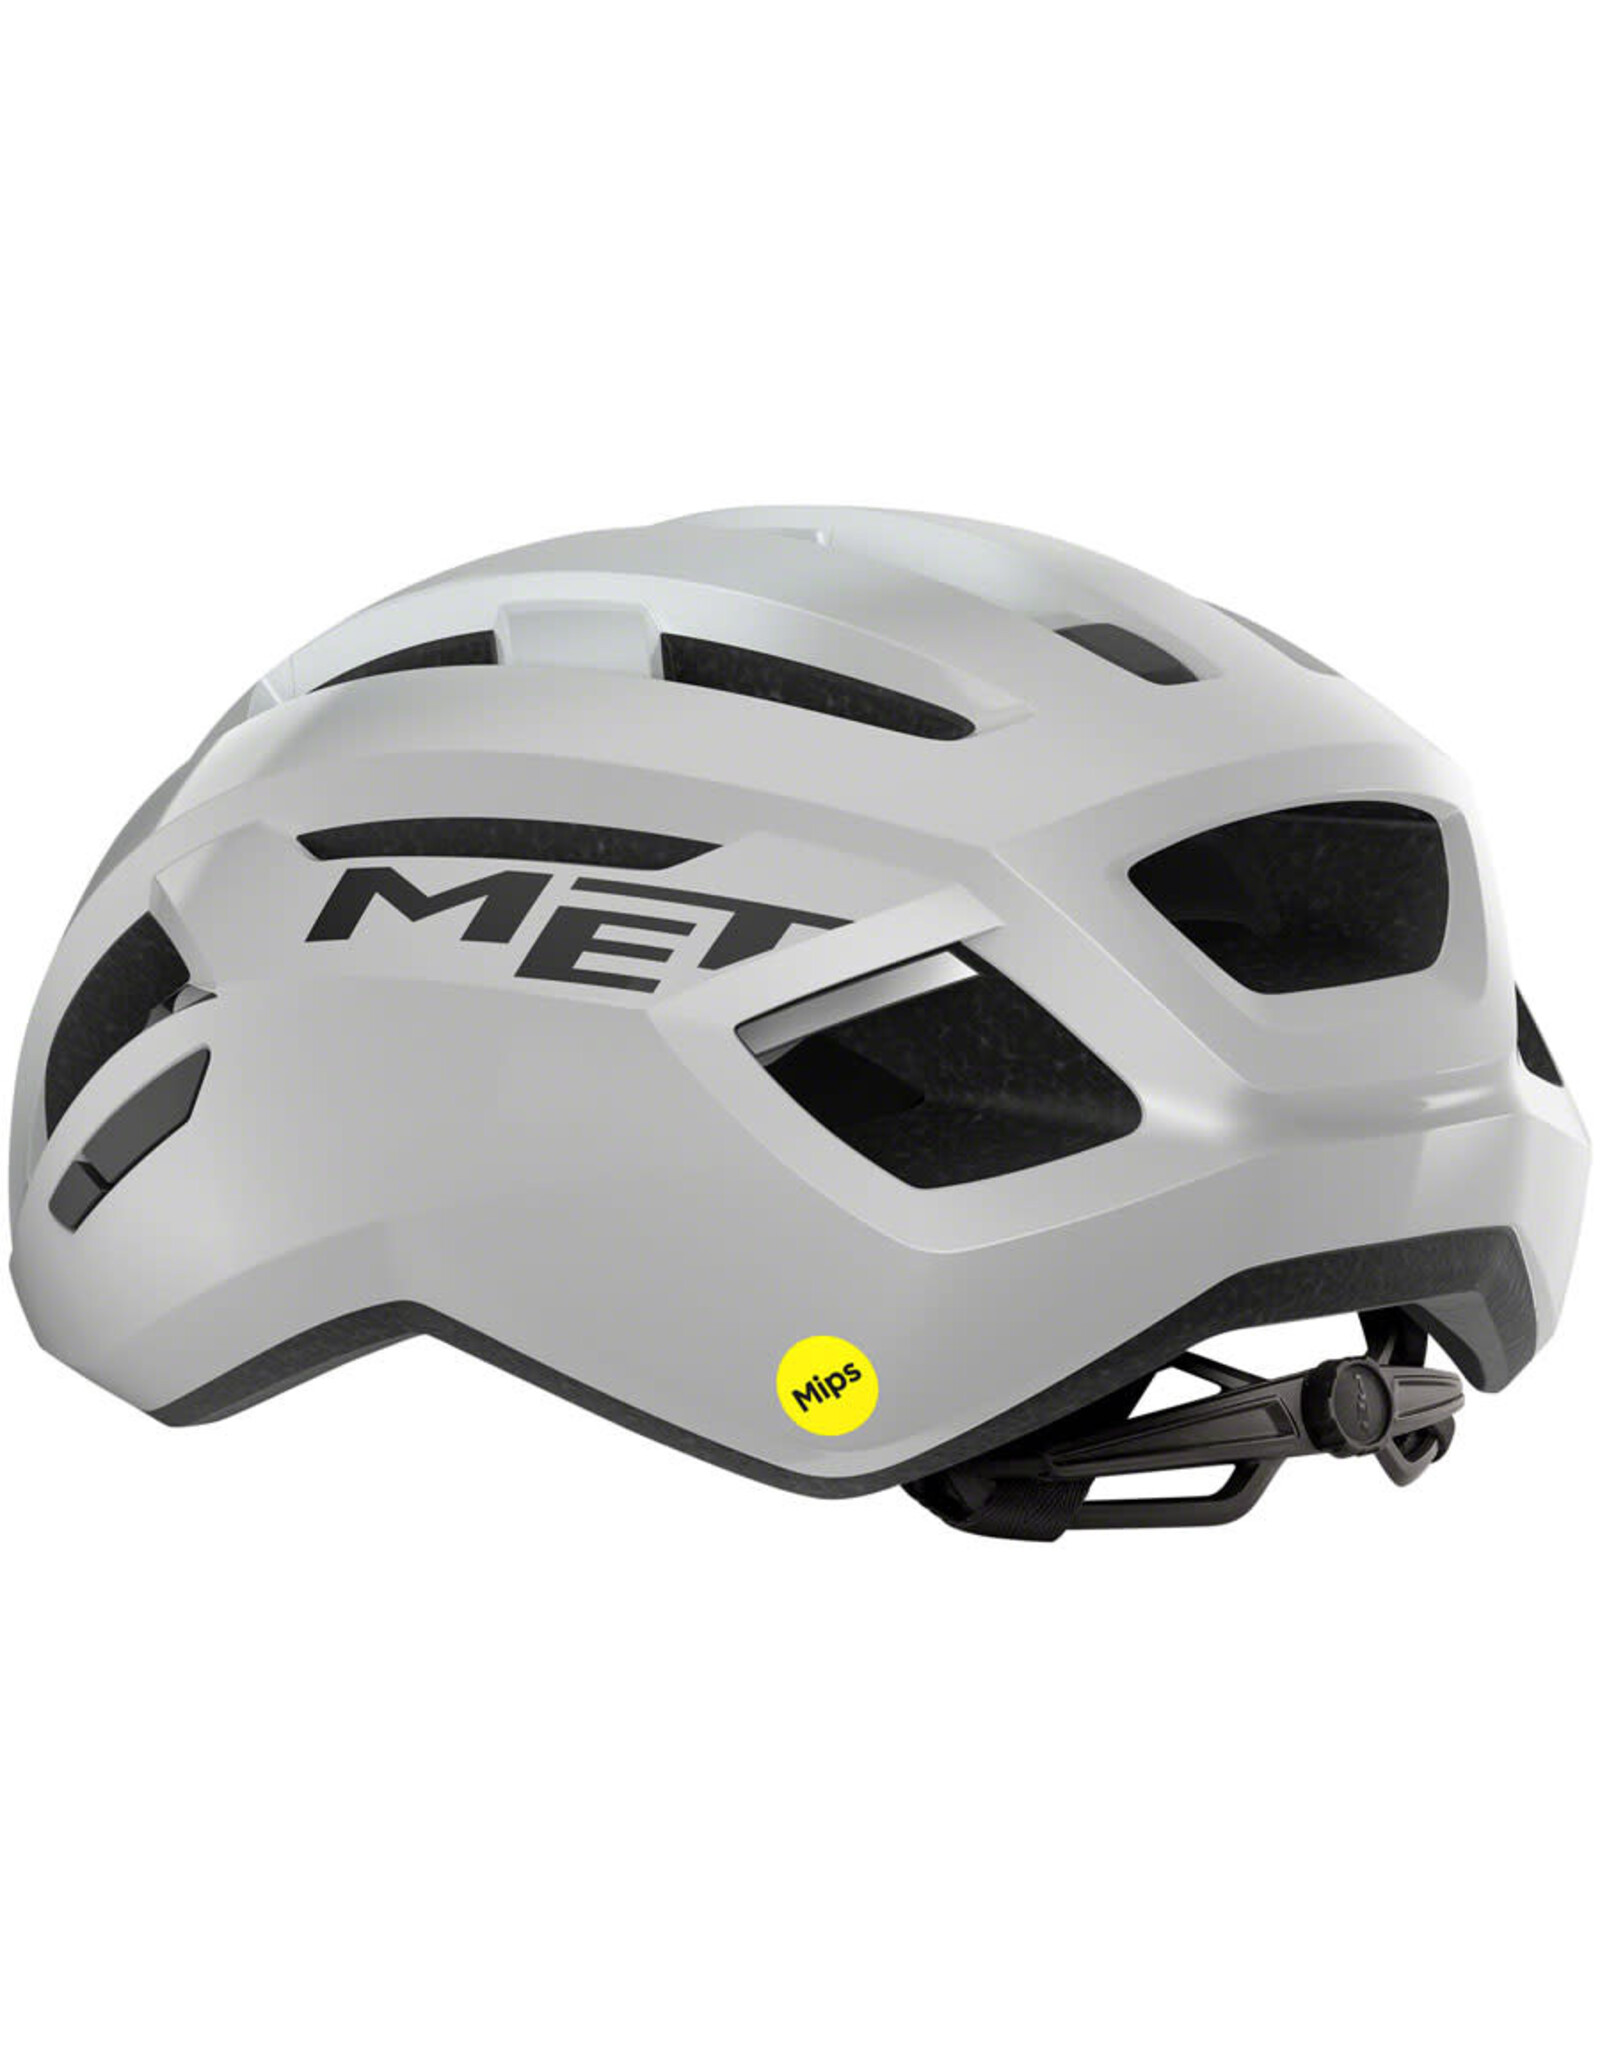 MET Helmets MET Vinci MIPS Helmet - White/Silver, Matte